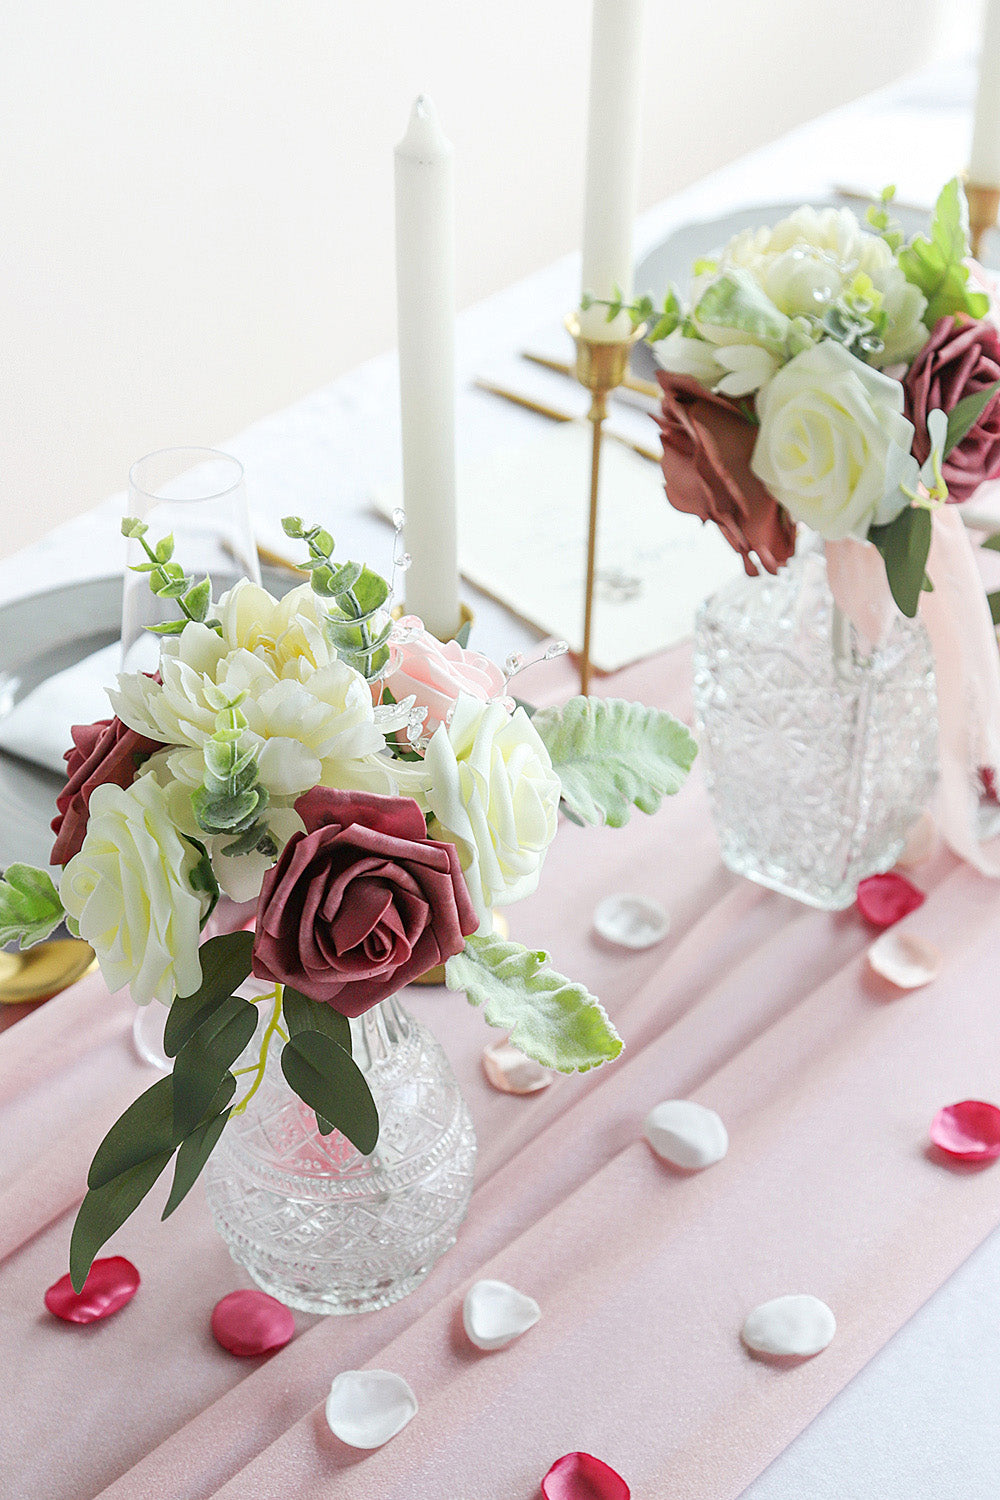 8''/10'' Bridesmaid Bouquets, Set of 4, Wedding Centerpieces - 4 Colors